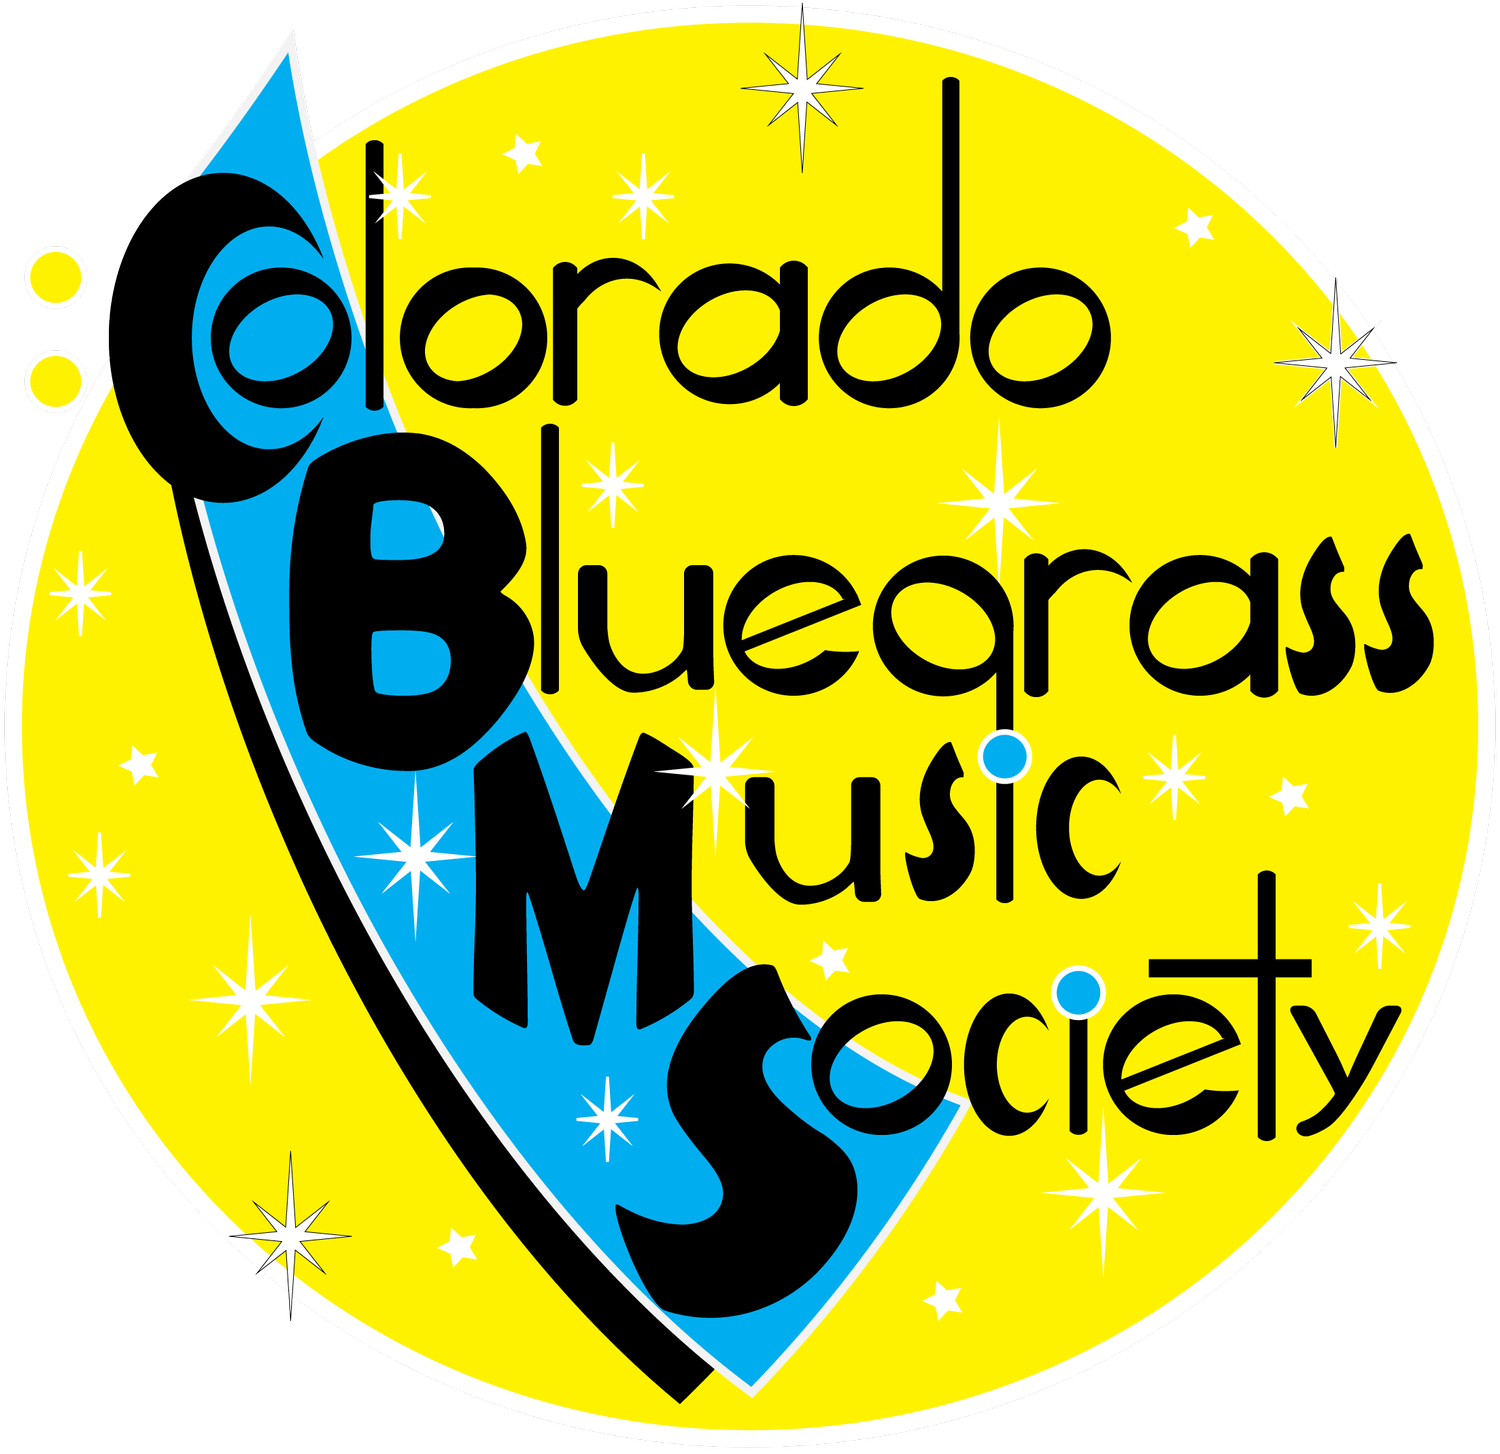 Colorado Bluegrass Music Society